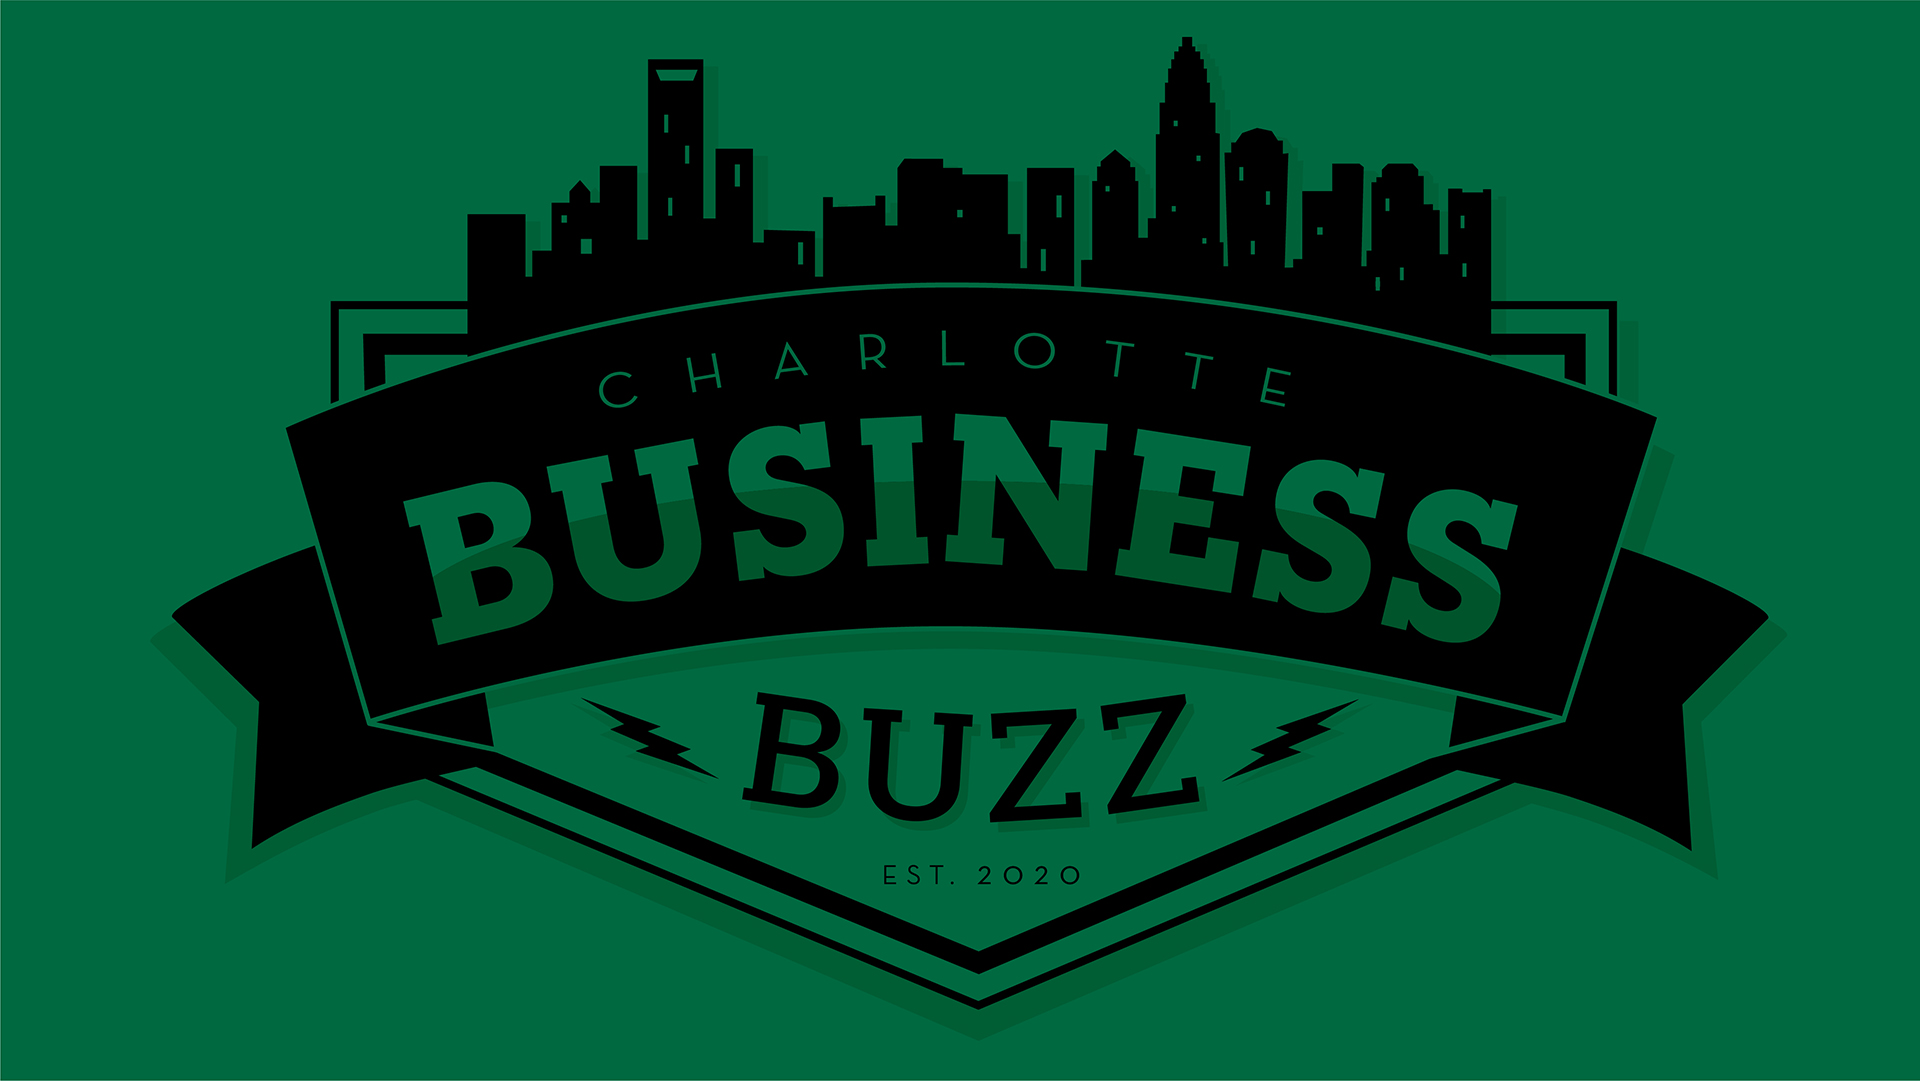 Charlotte Business Buzz